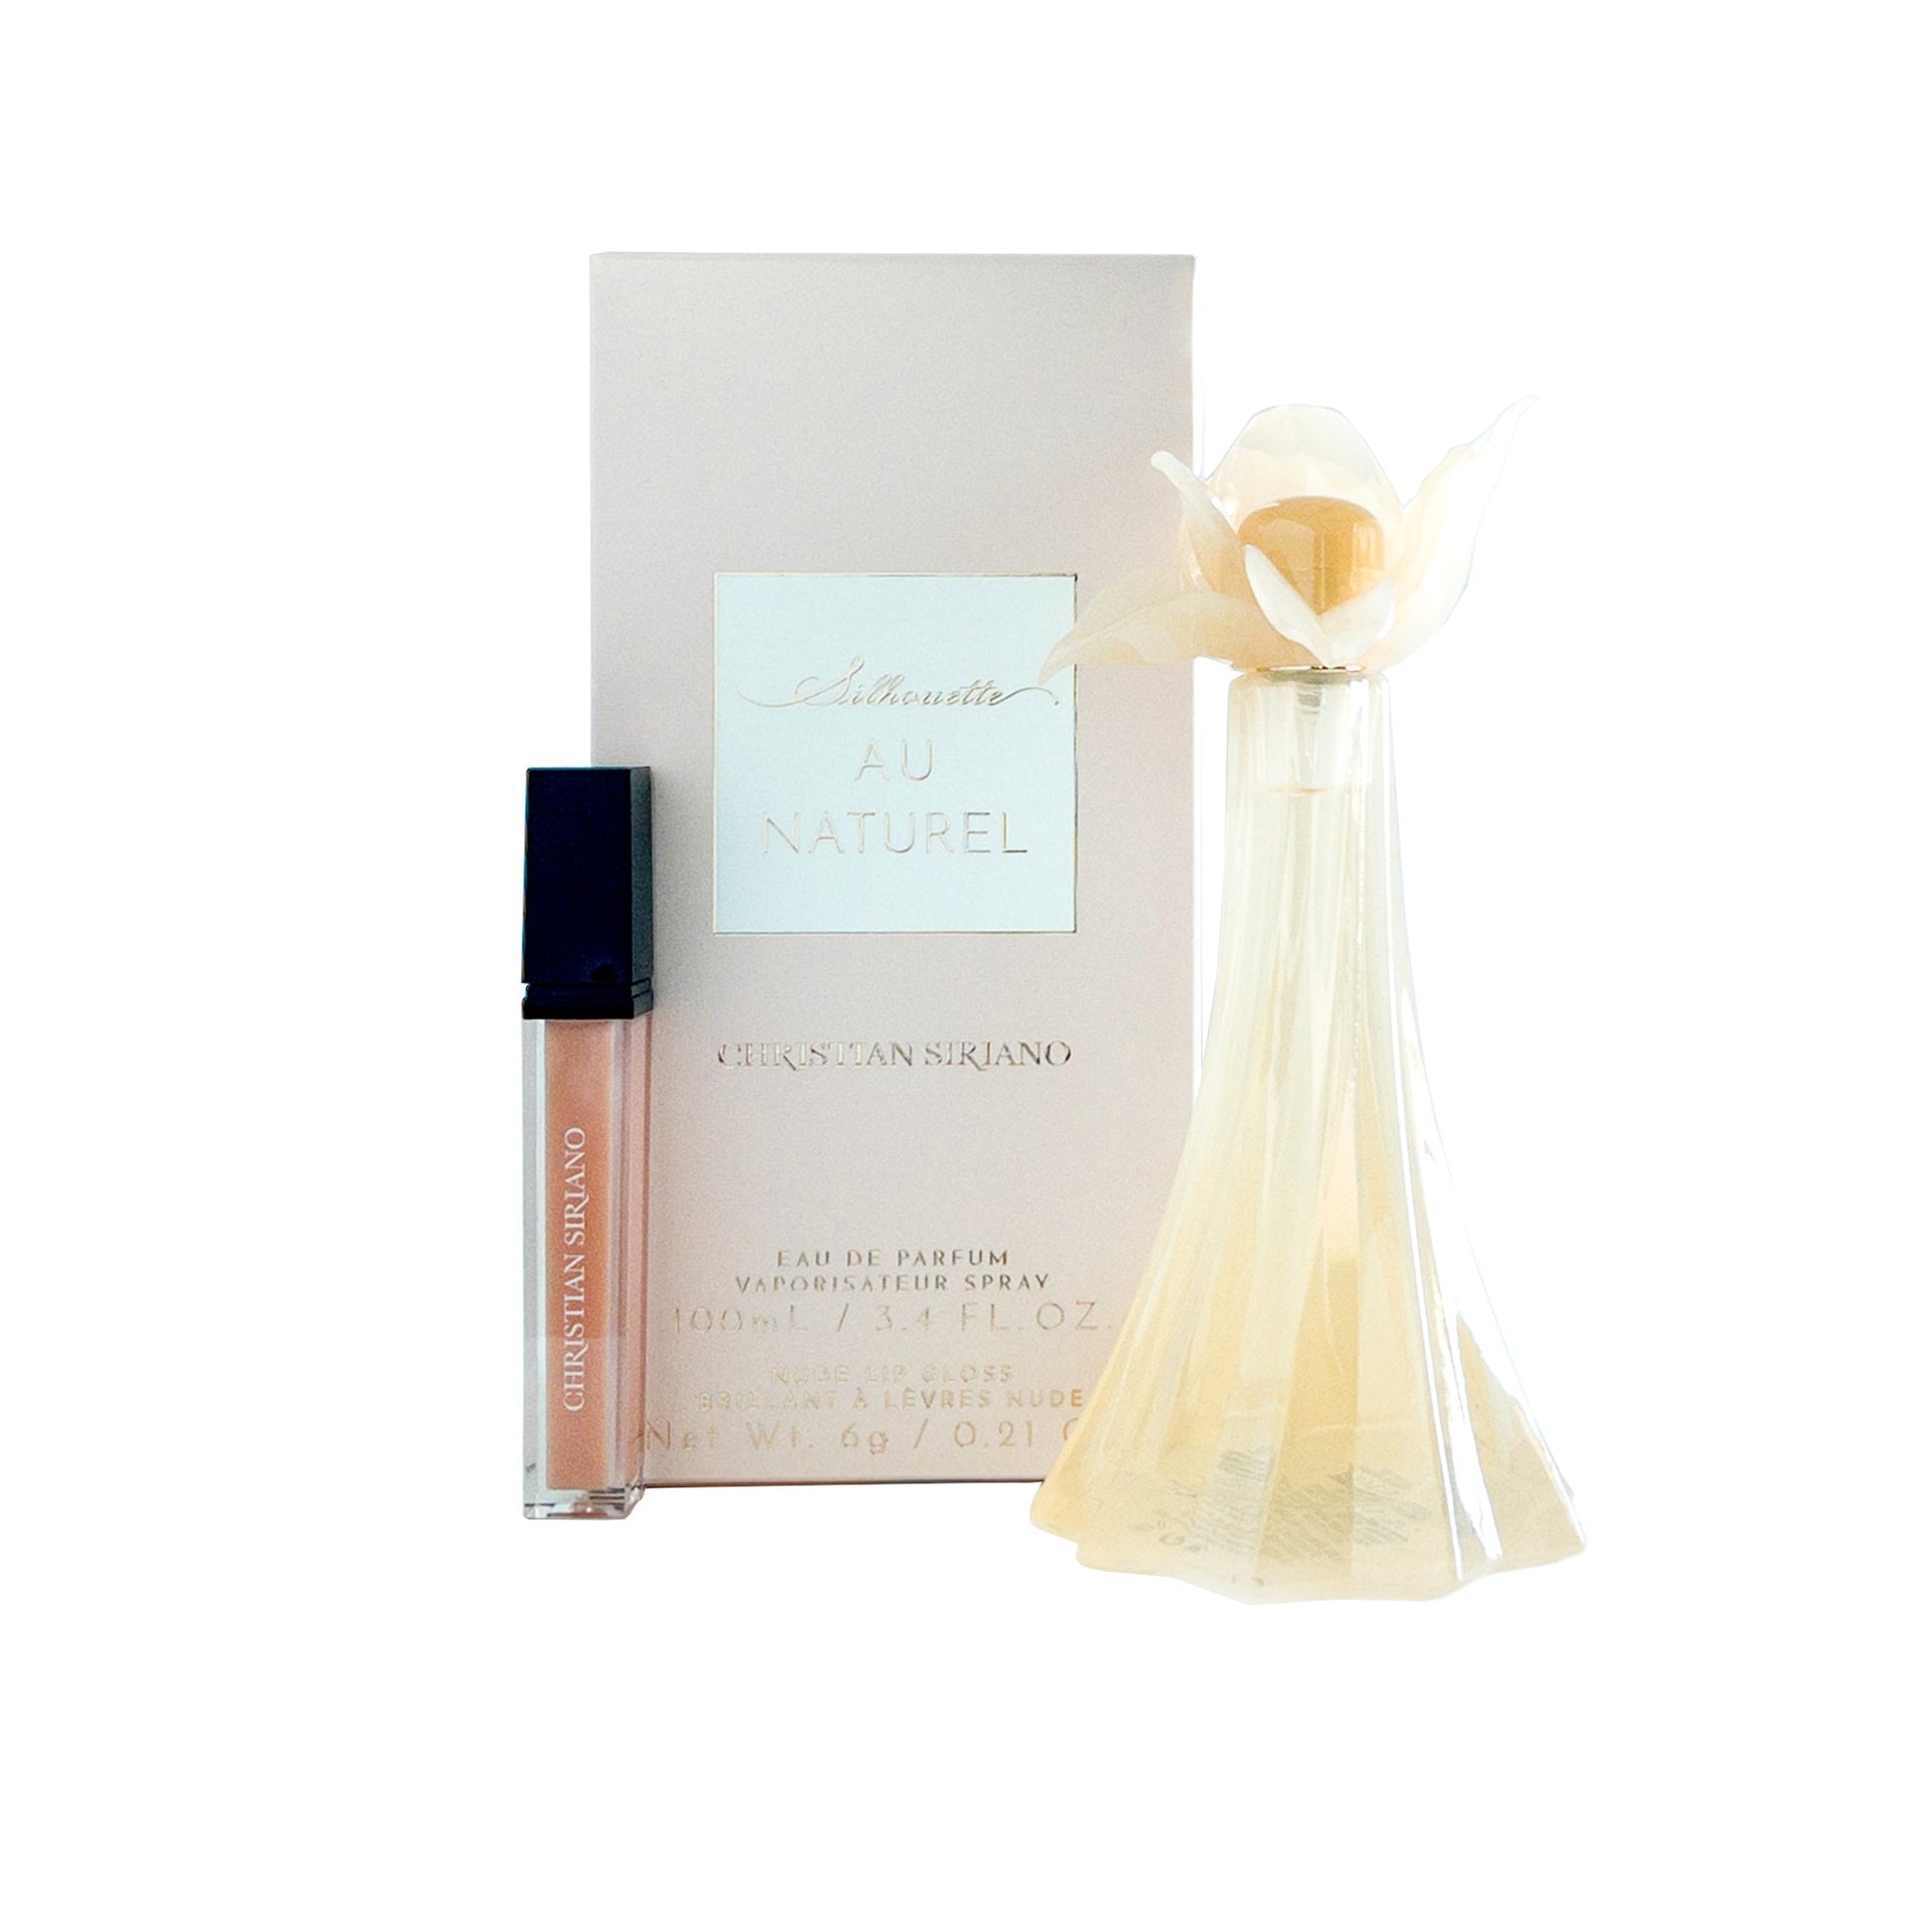 Silhouette Au Natural Eau de Parfum Spray for Women by Christian Siriano, Product image 1